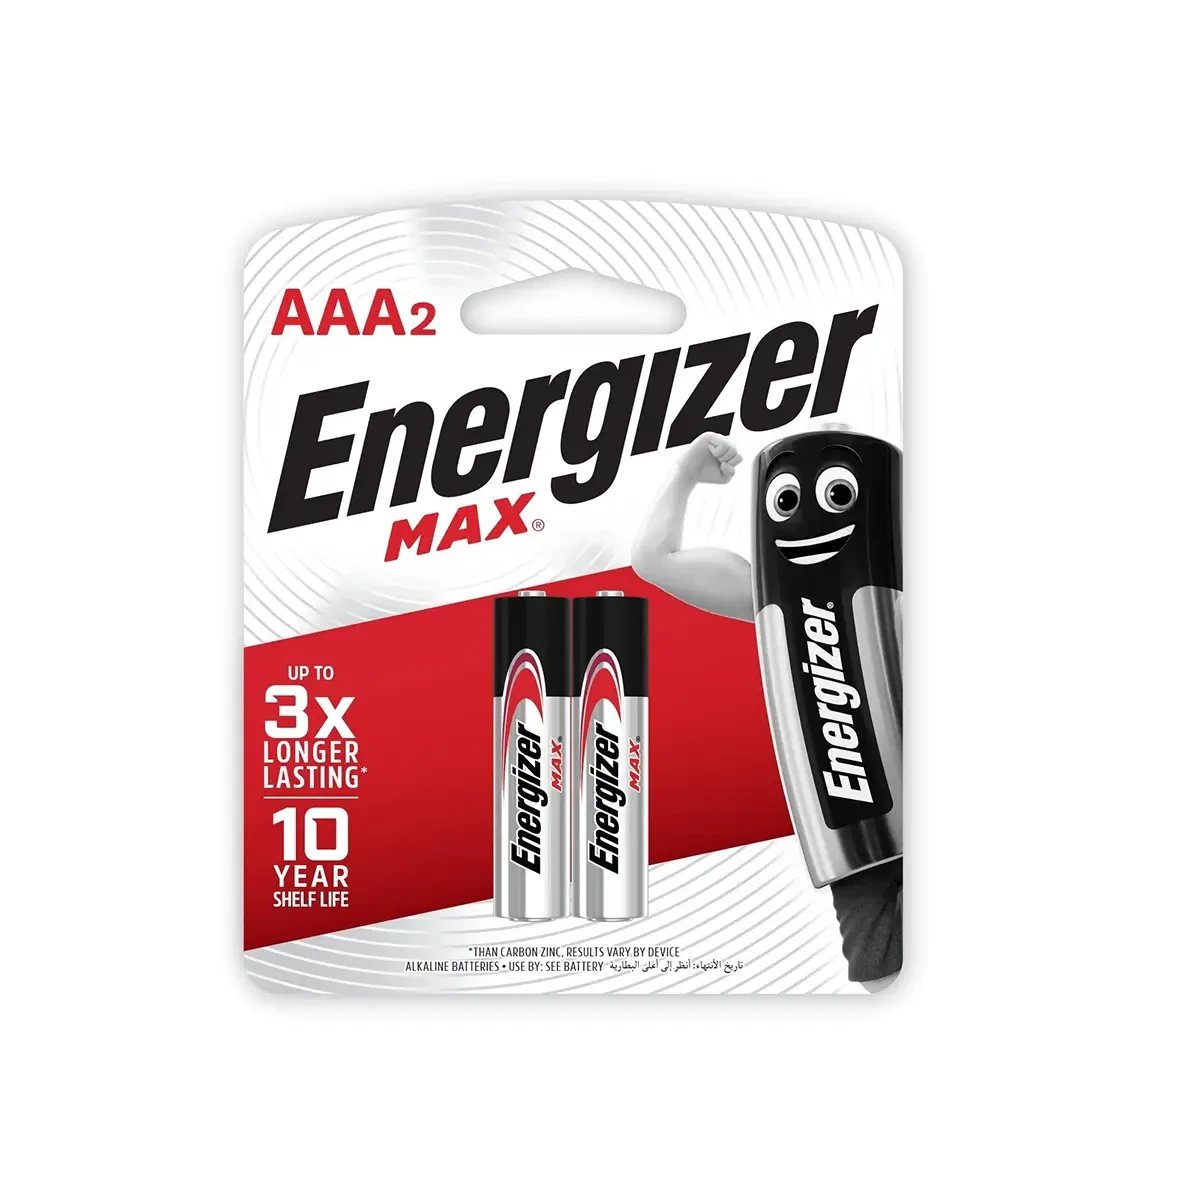 Energizer 2 AAA Max Blister Card - 2 حجر ريموت